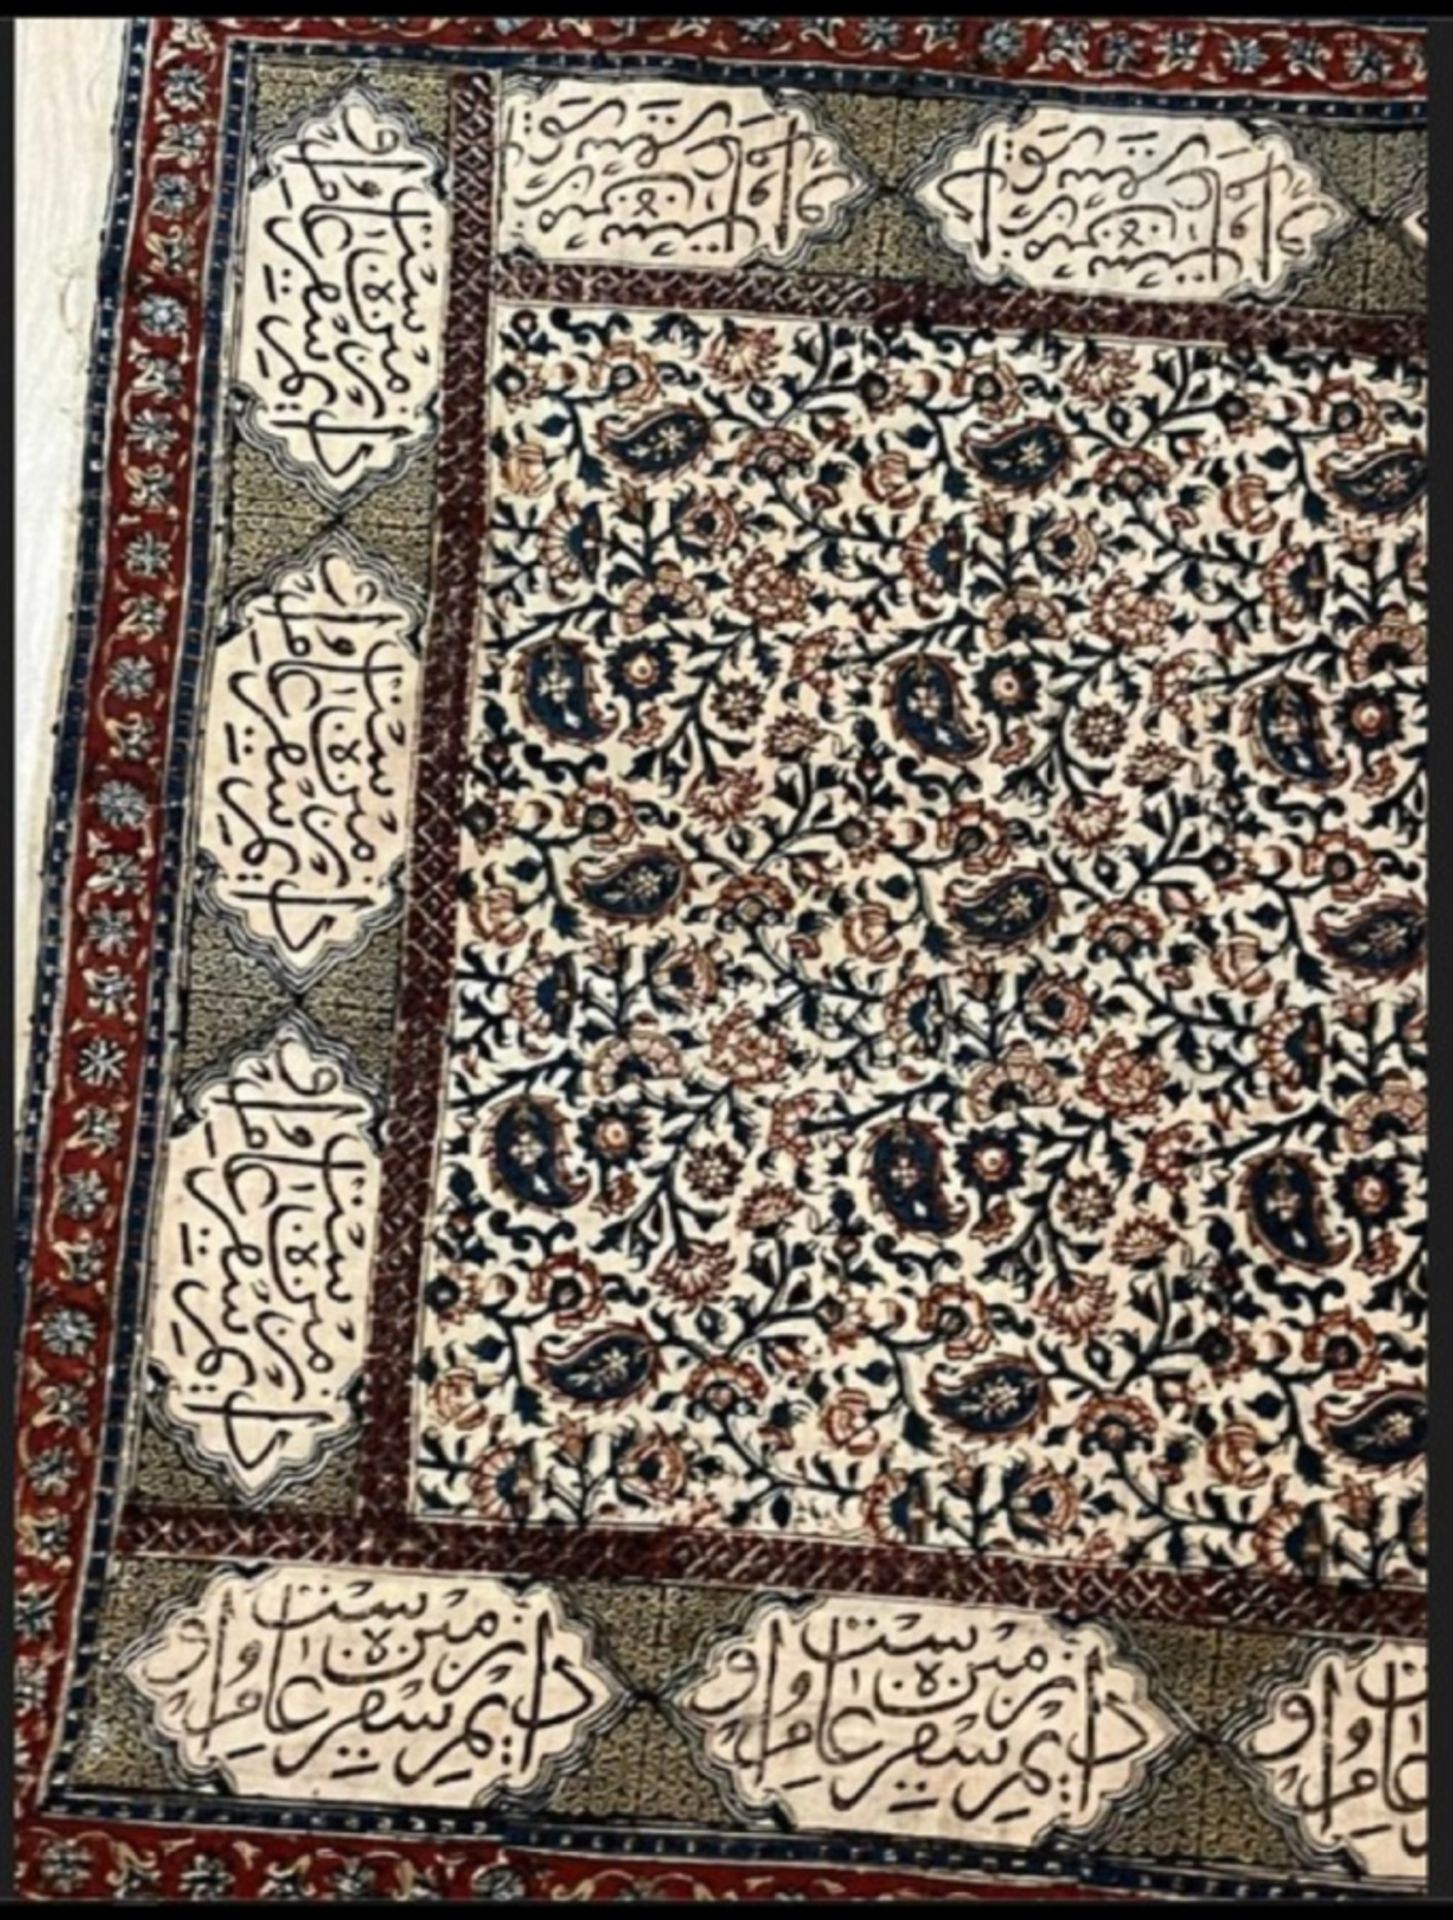 Kalamkari textile with islamic calligraphy - Image 3 of 12